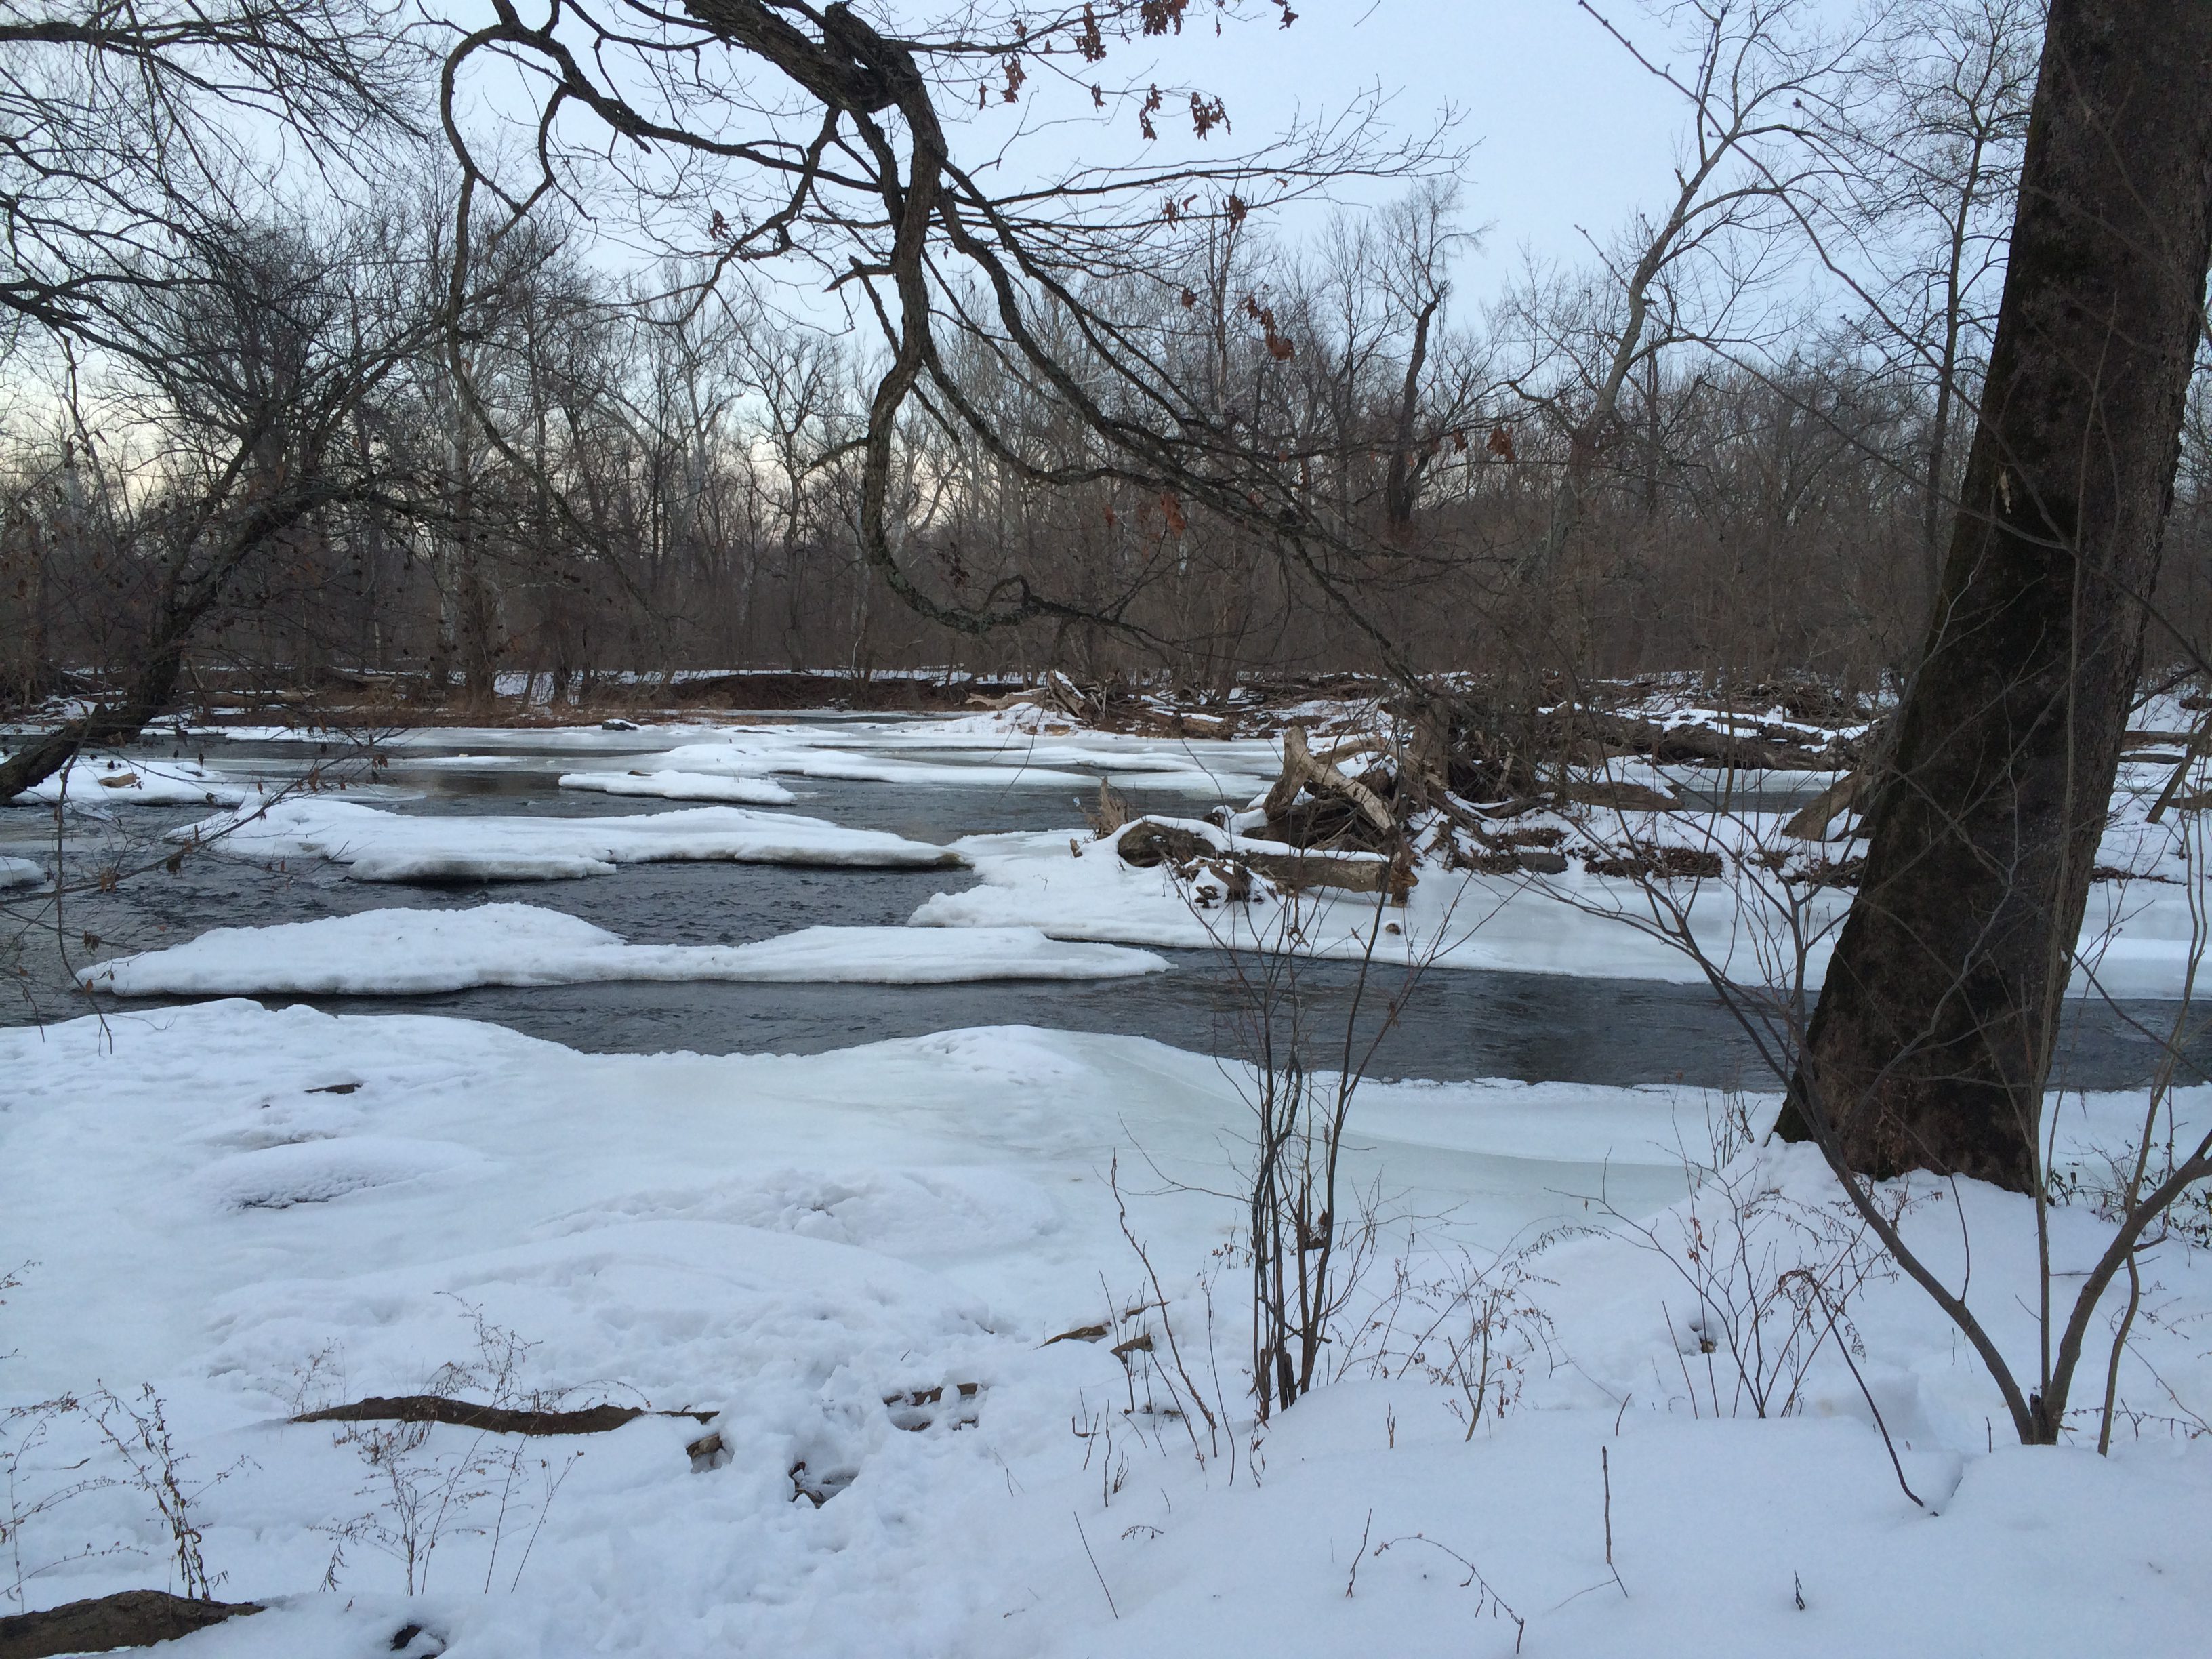 The frozen Potomac River.